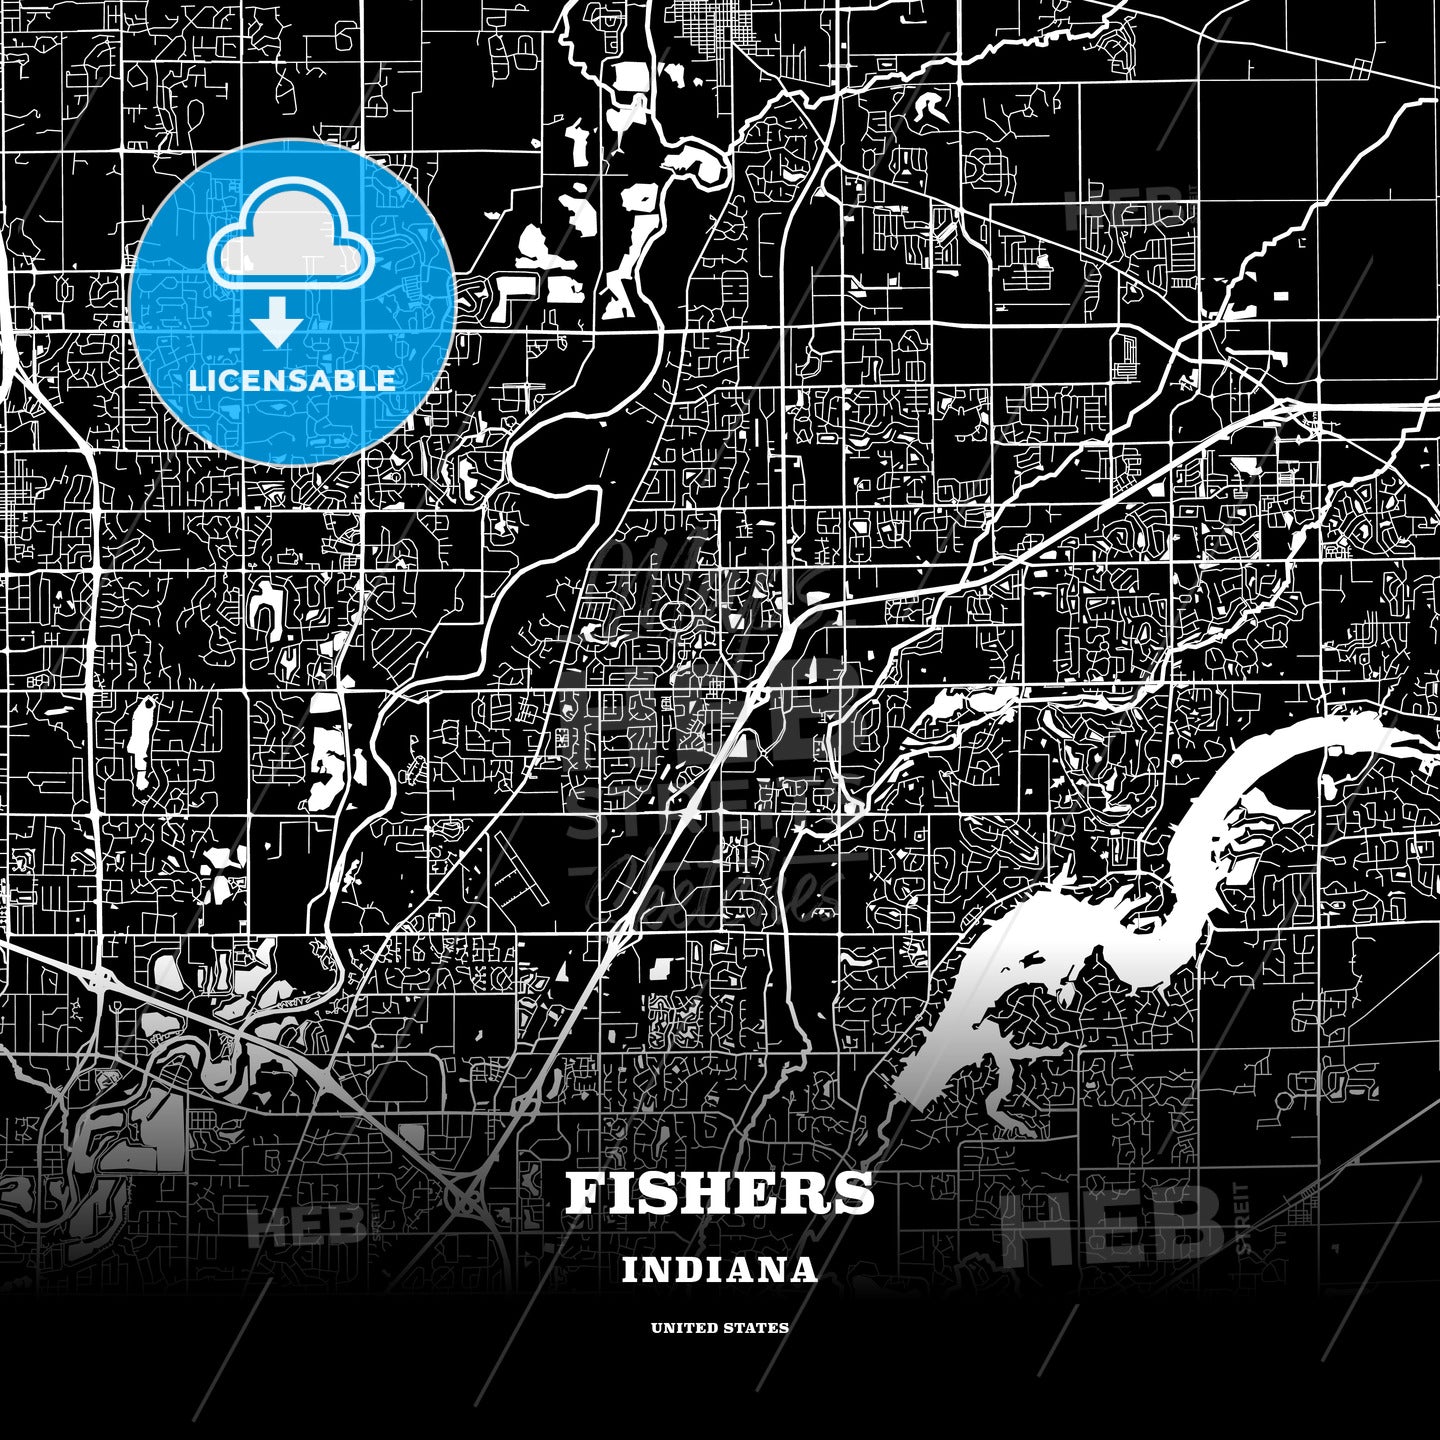 Fishers, Indiana, USA map